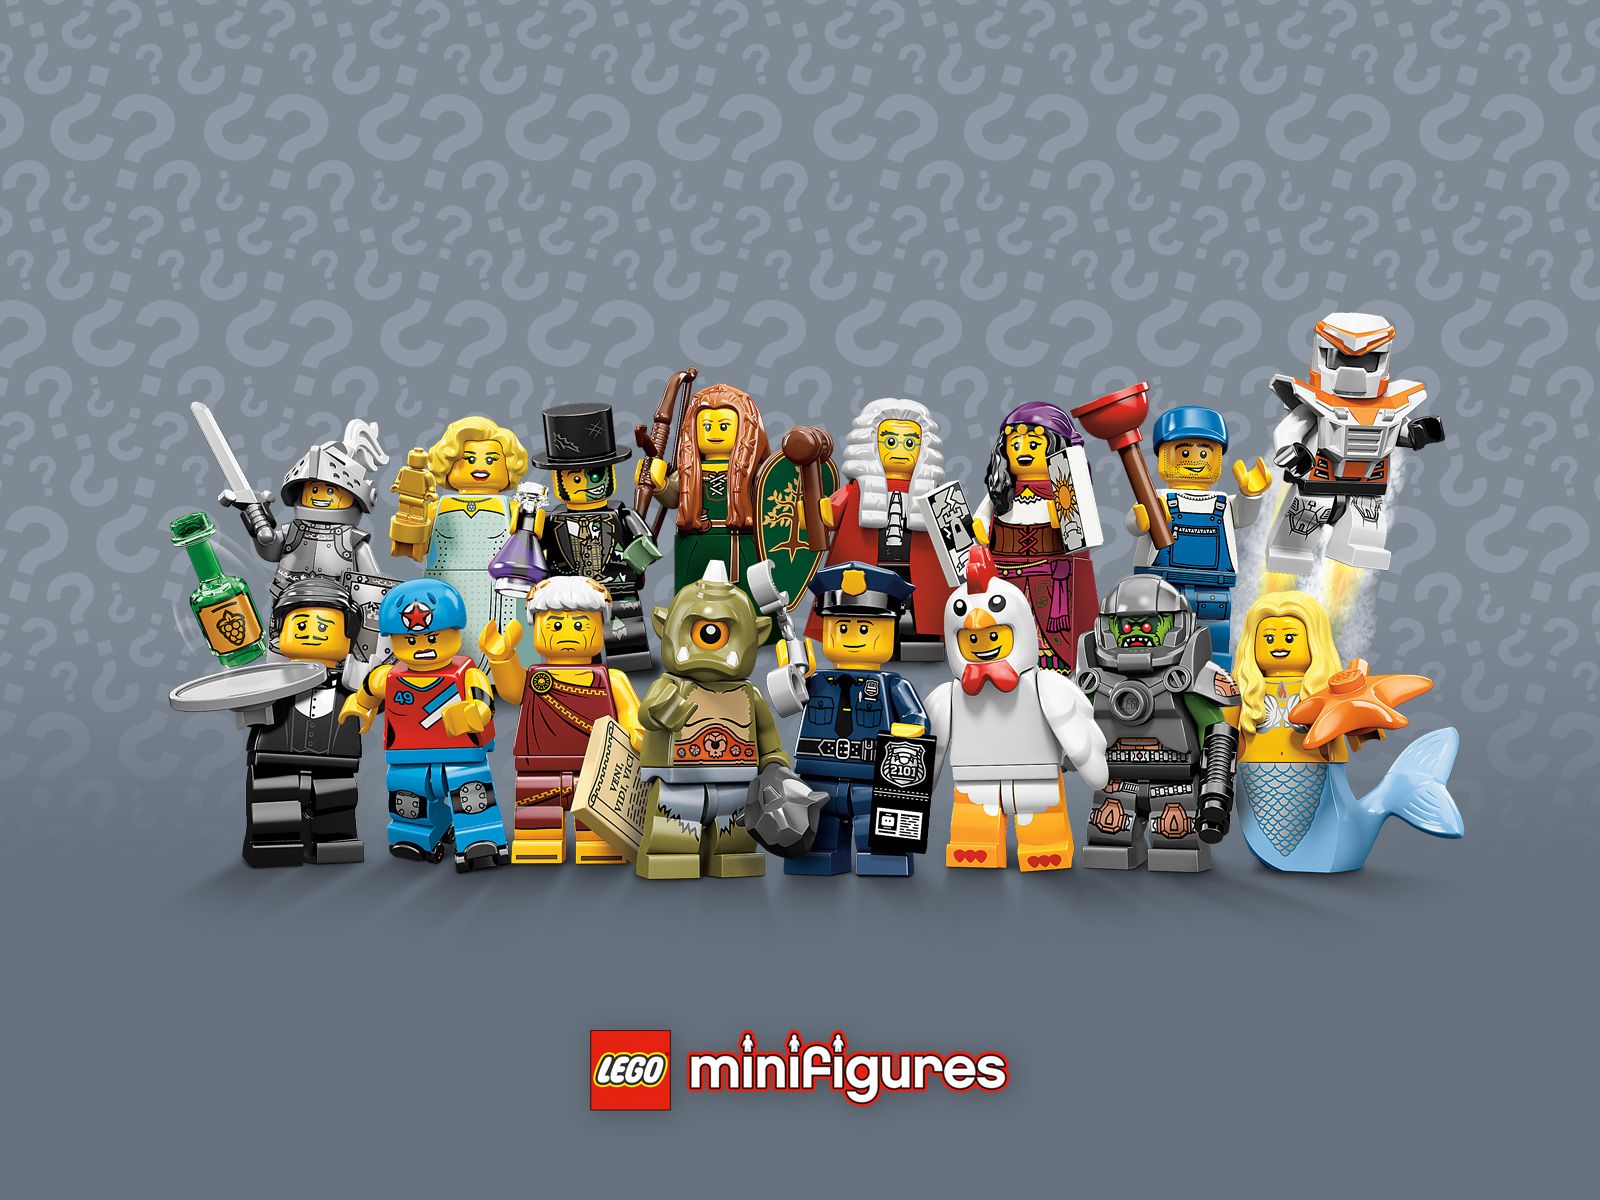 LEGO Minifigures Wallpaper Free LEGO Minifigures Background